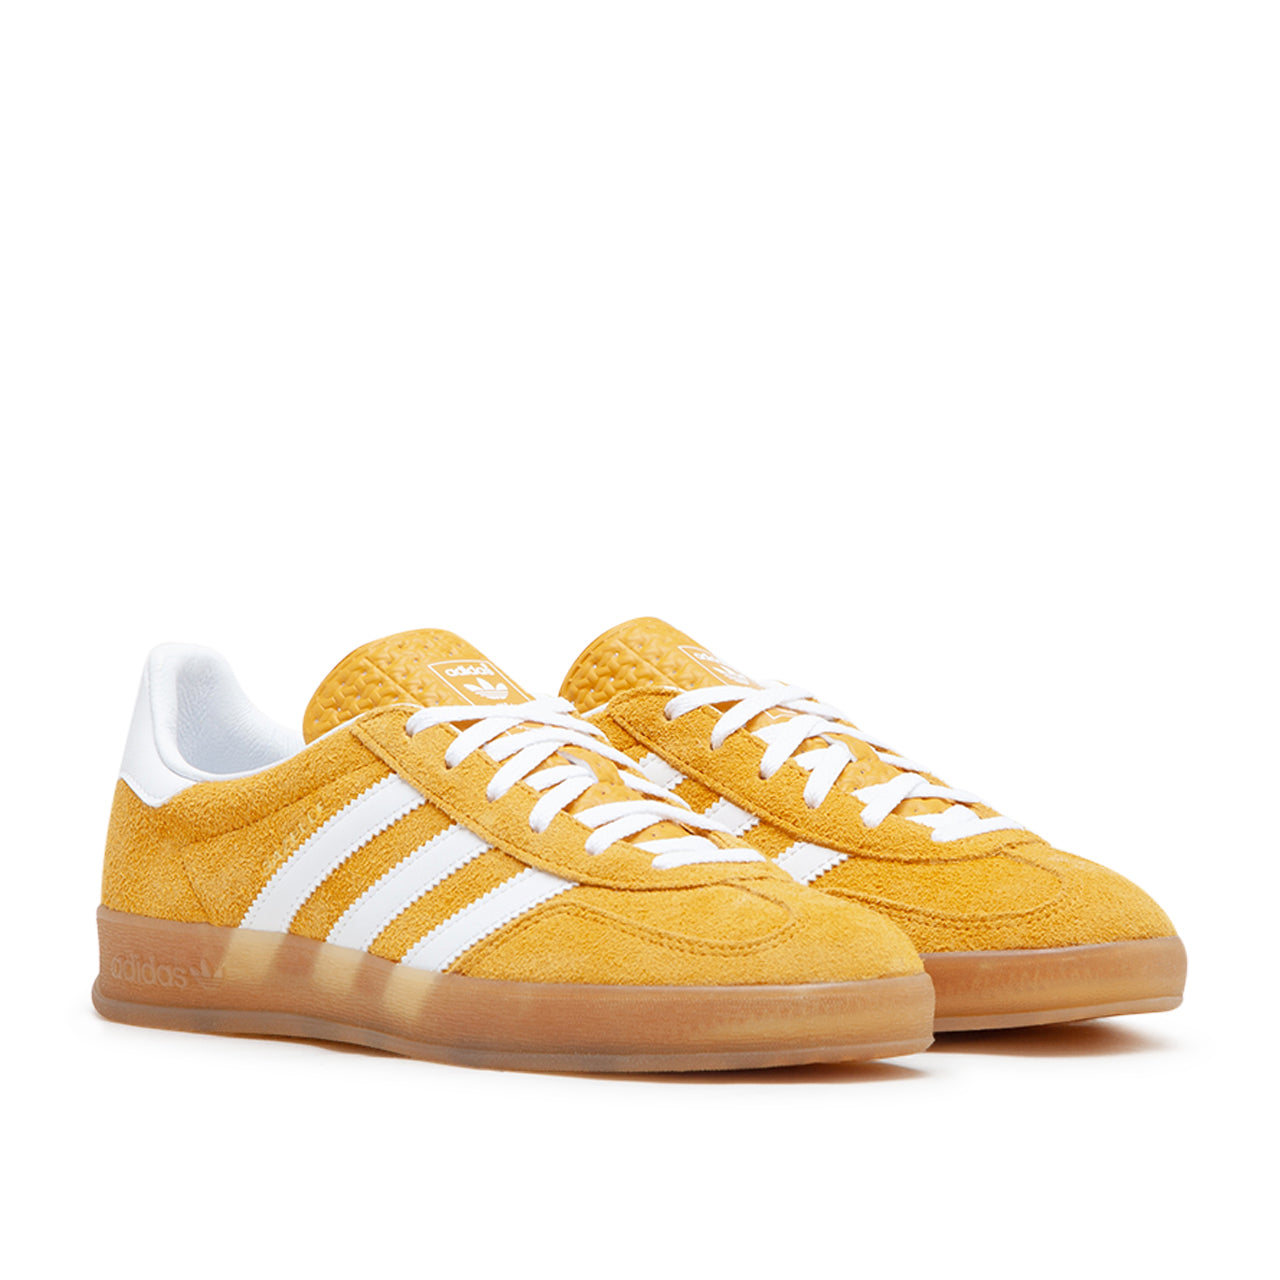 adidas Gazelle Indoor Orange Peel White (Women's) - HQ8716 - US